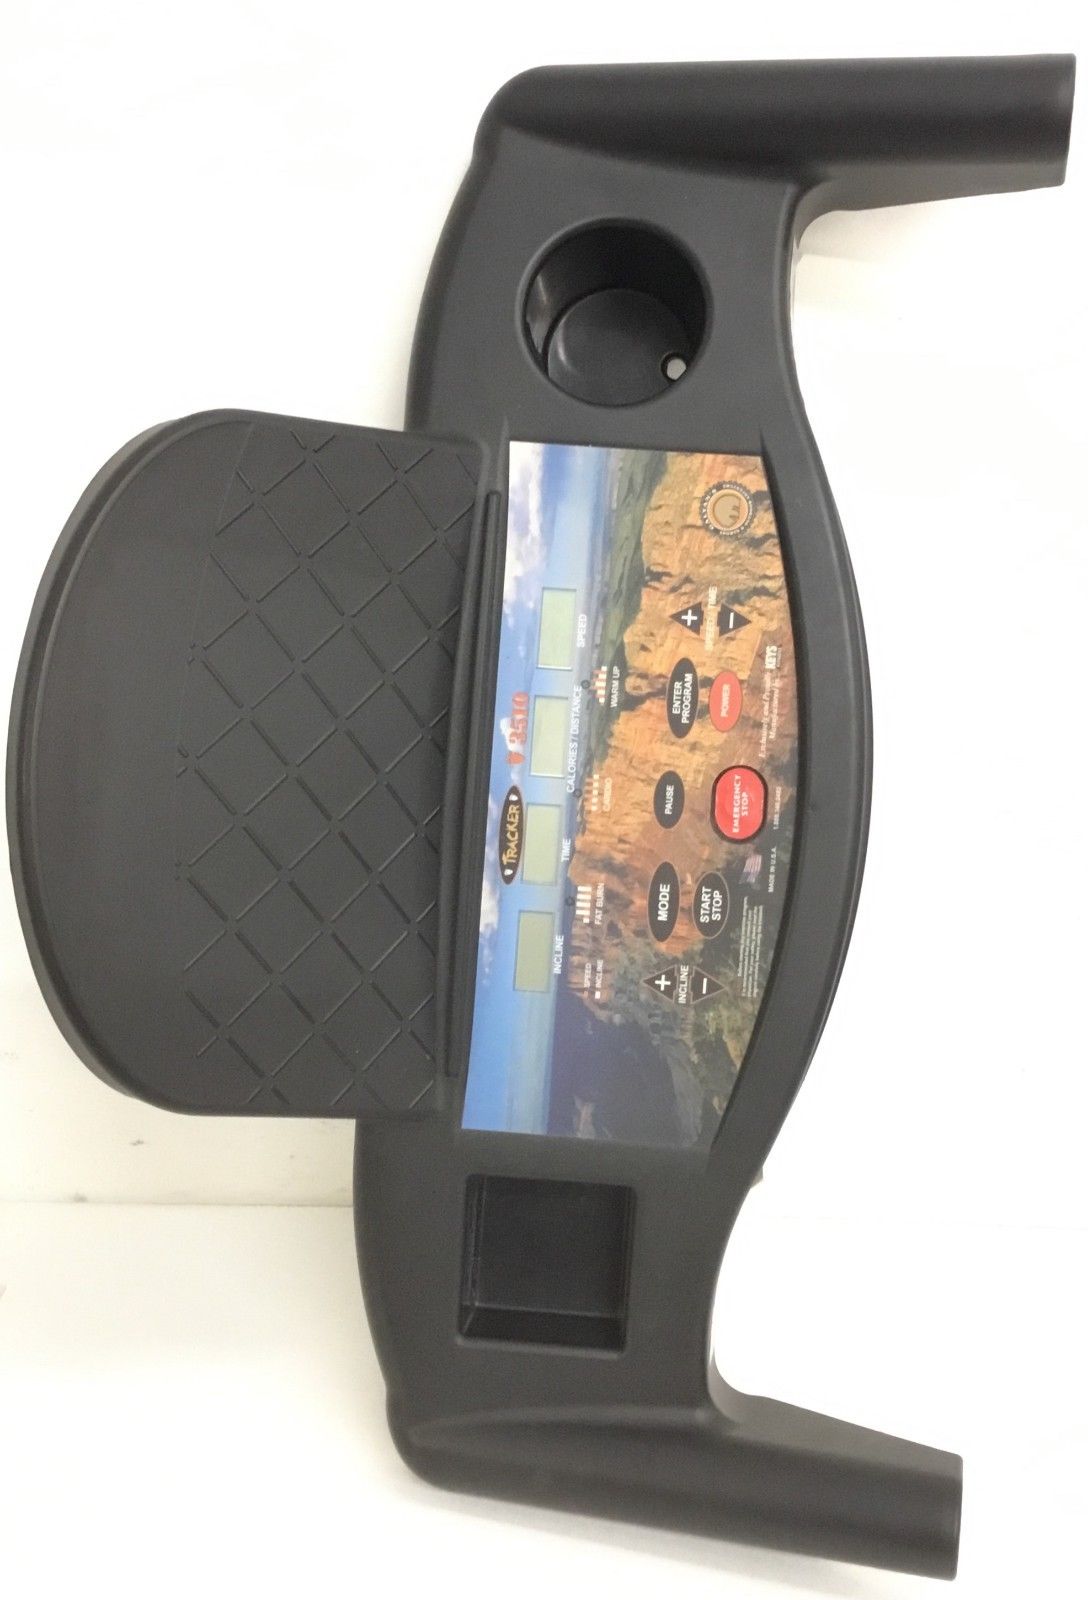 Keys GT3510 GT5510 Treadmill Display Console Panel 150567 (Used)